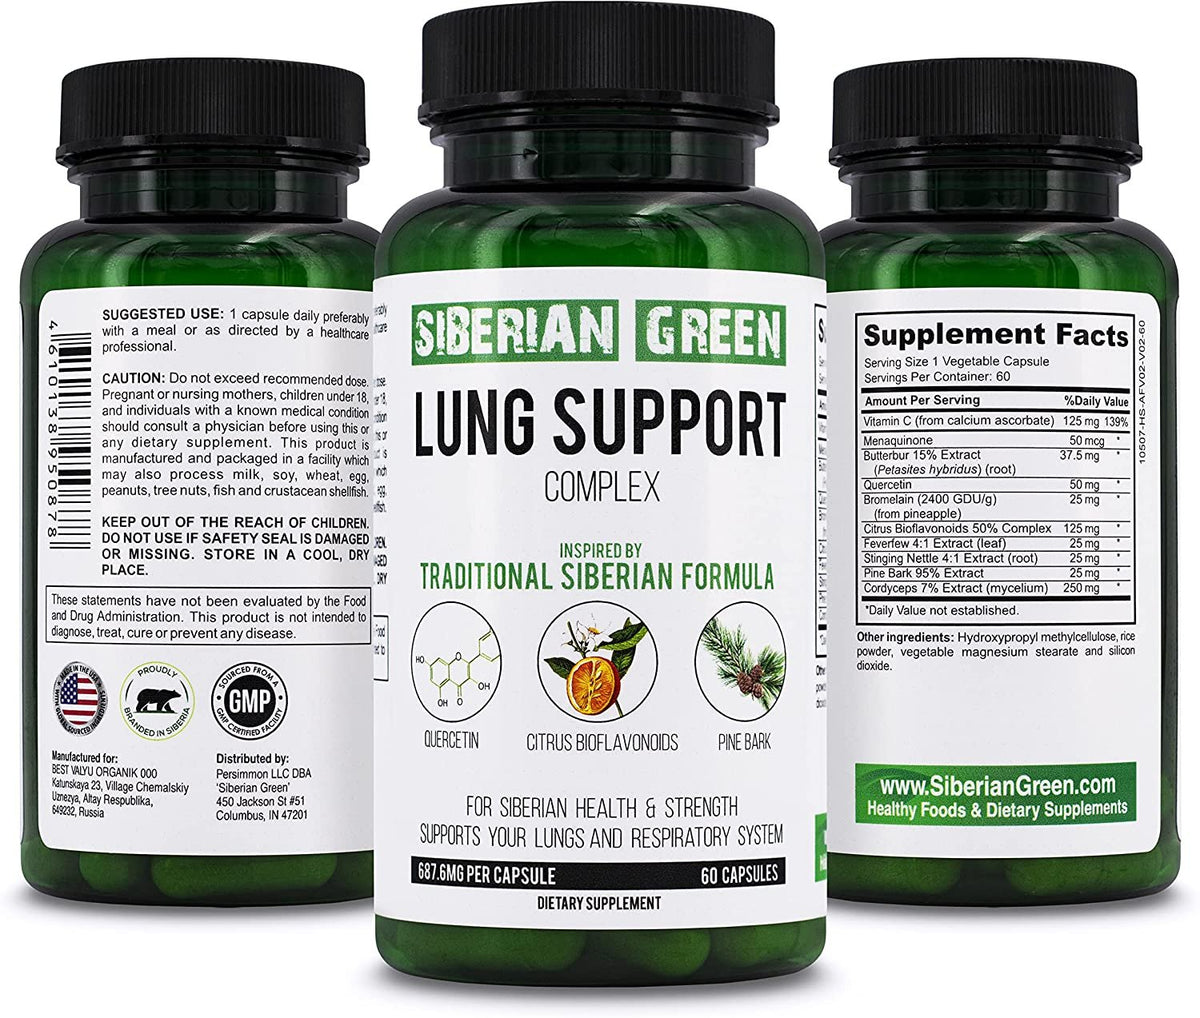 Siberian Green Lung Support Complex 60 Capsules - Traditional Formula Supplement Rich in Quercetin, Citrus Bioflavonoids, Pine Bark